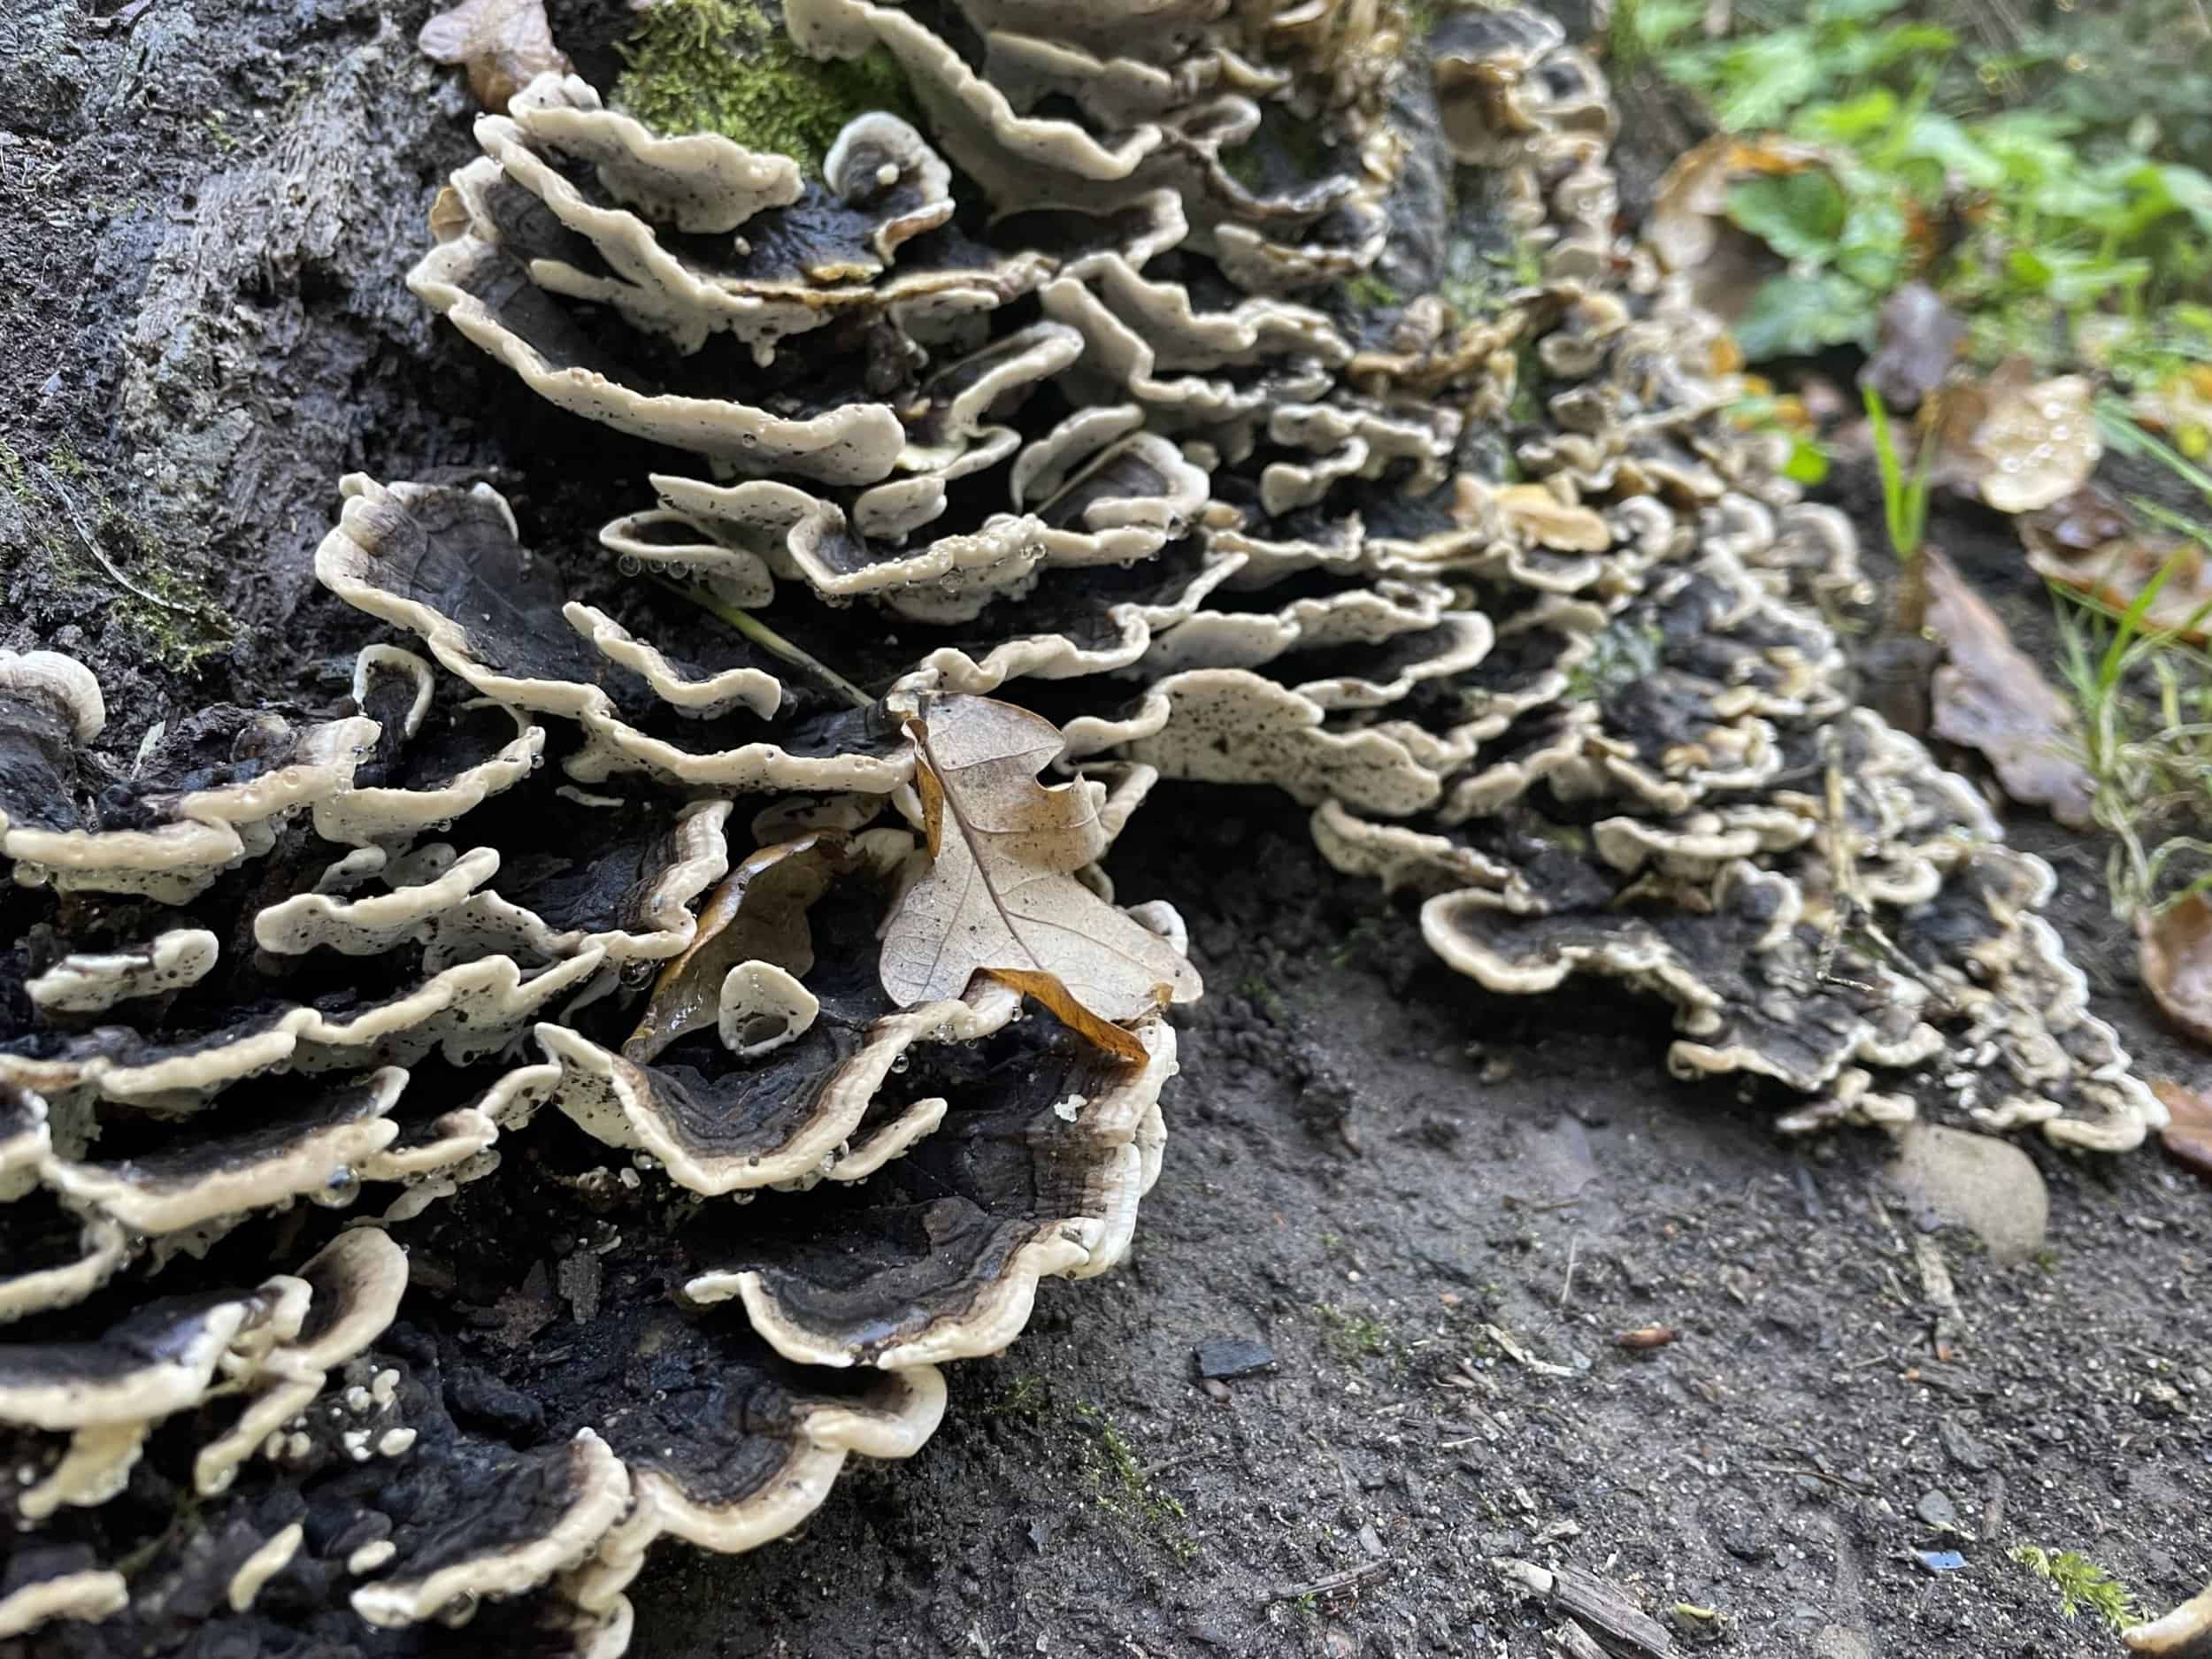 Fungi growing on trees